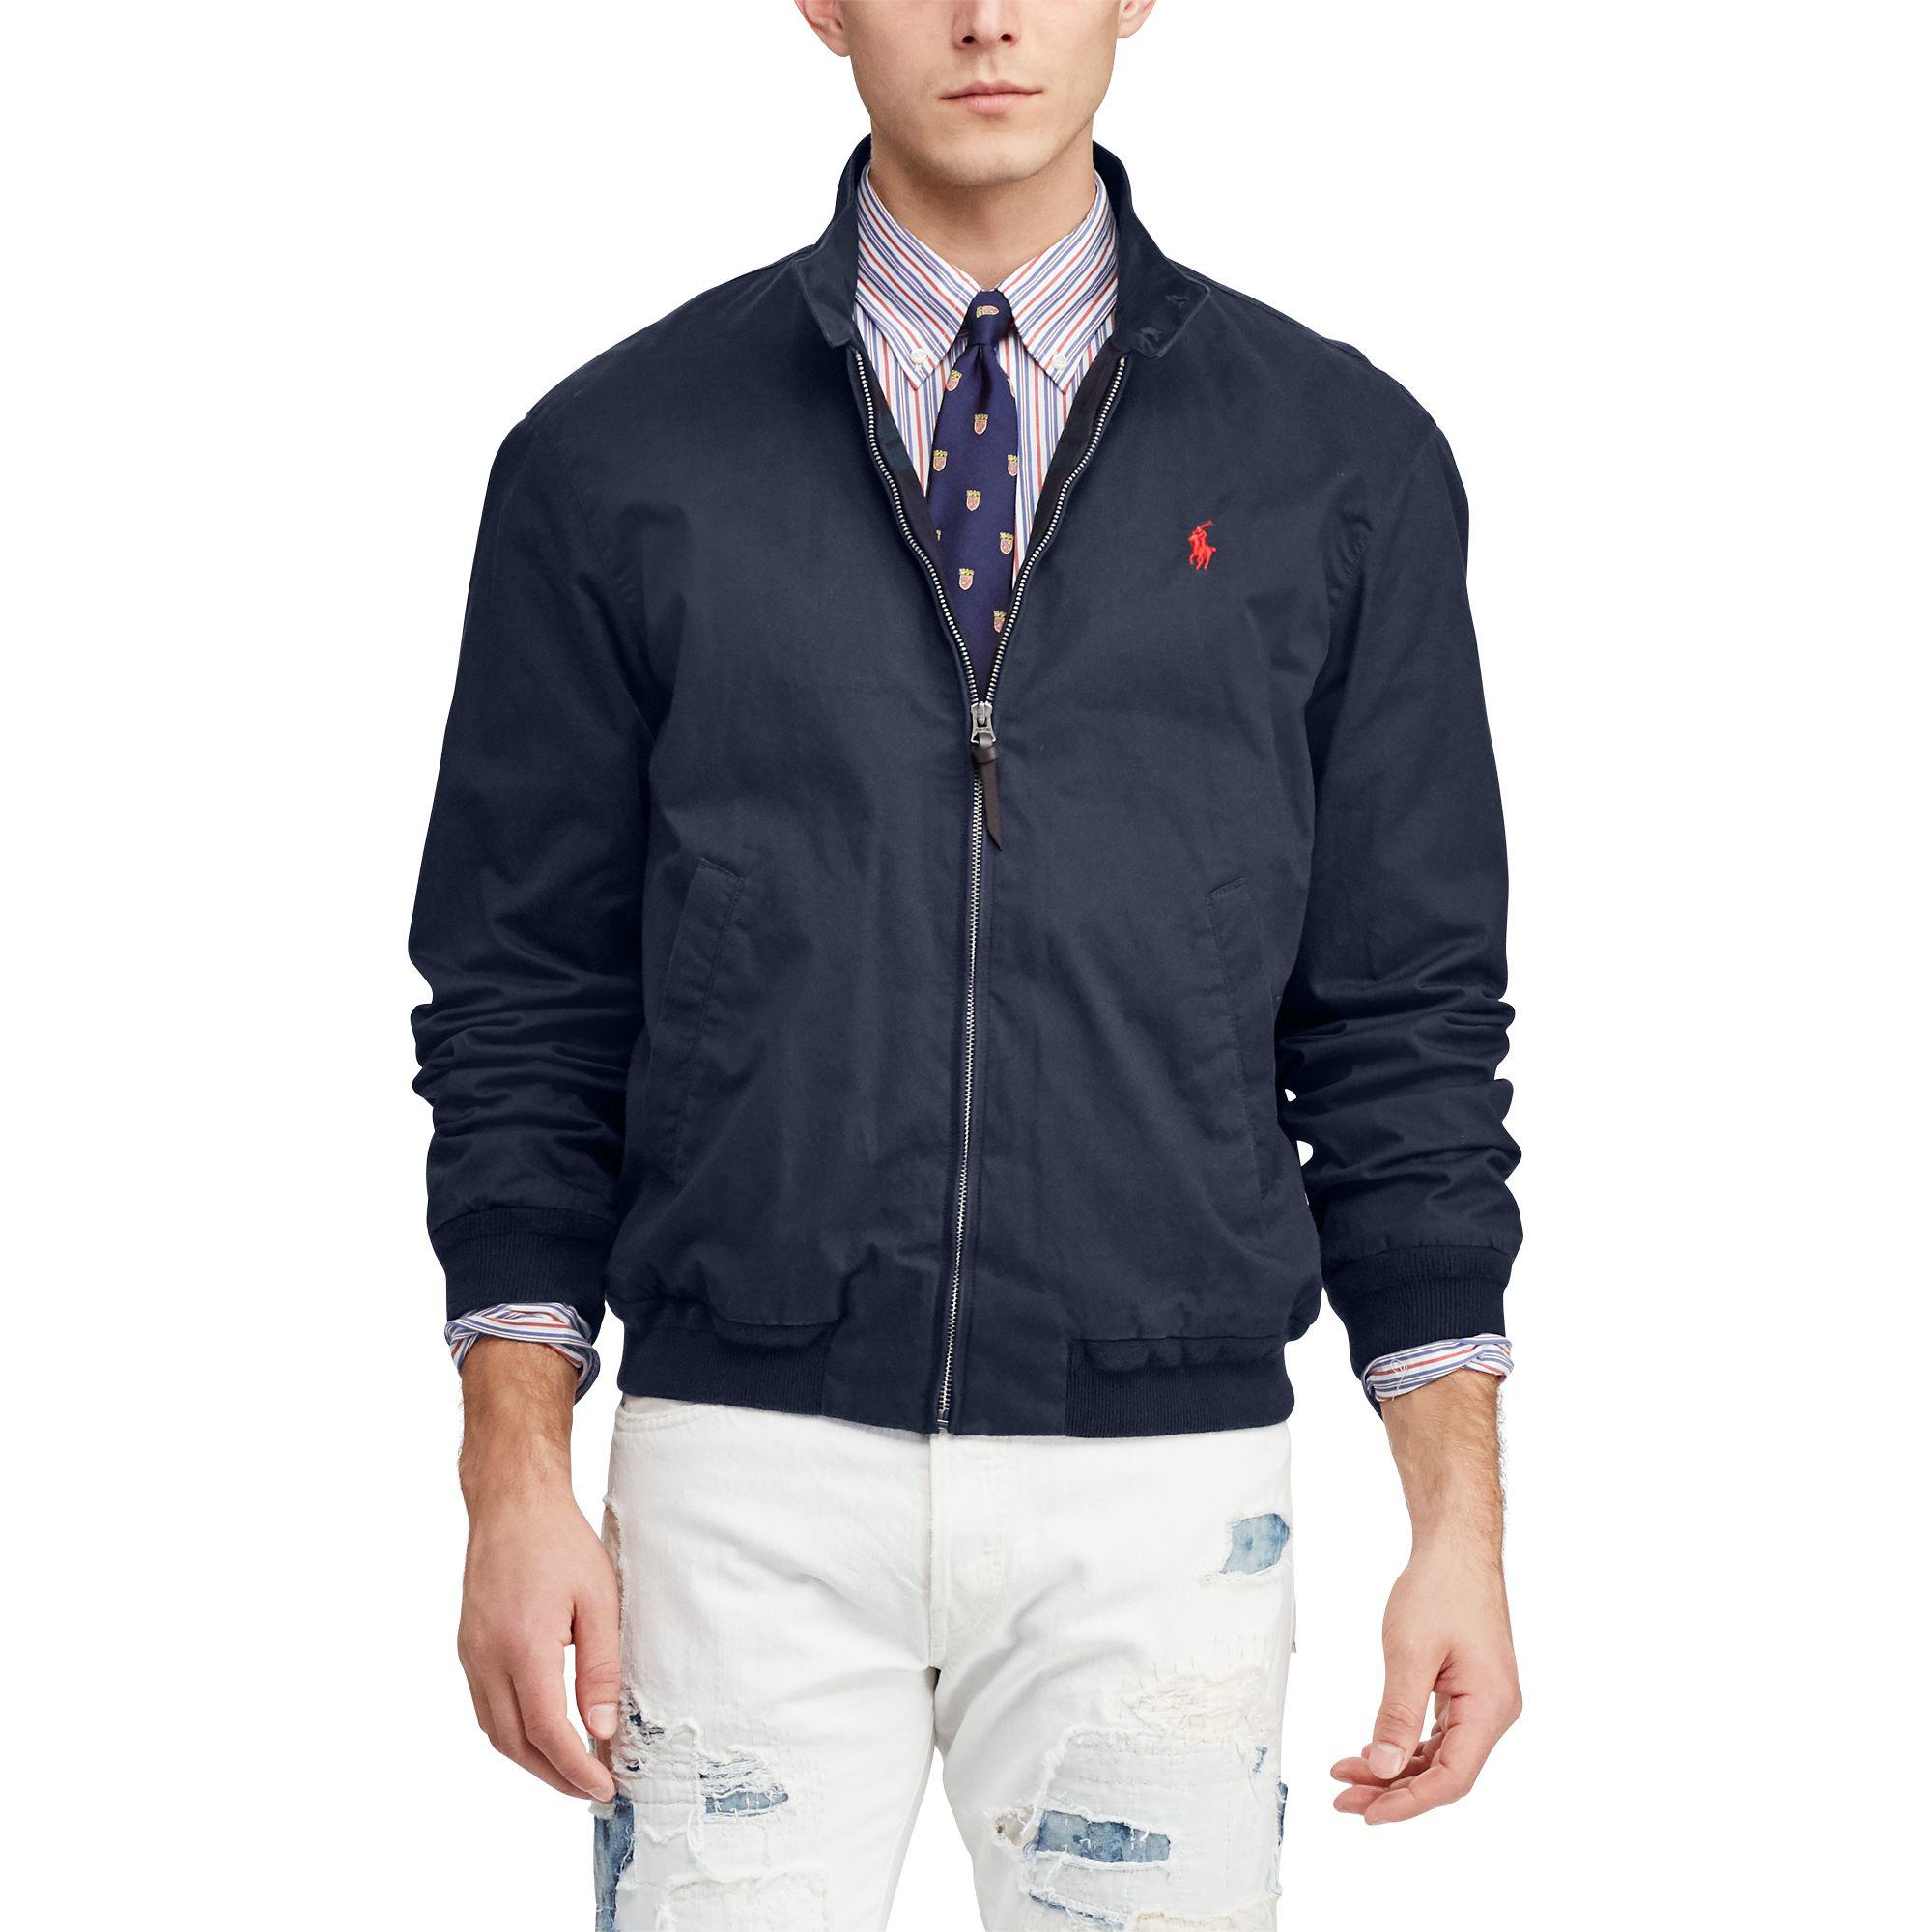 Polo Ralph Lauren Cotton Twill Jacket in Blue for Men - Lyst